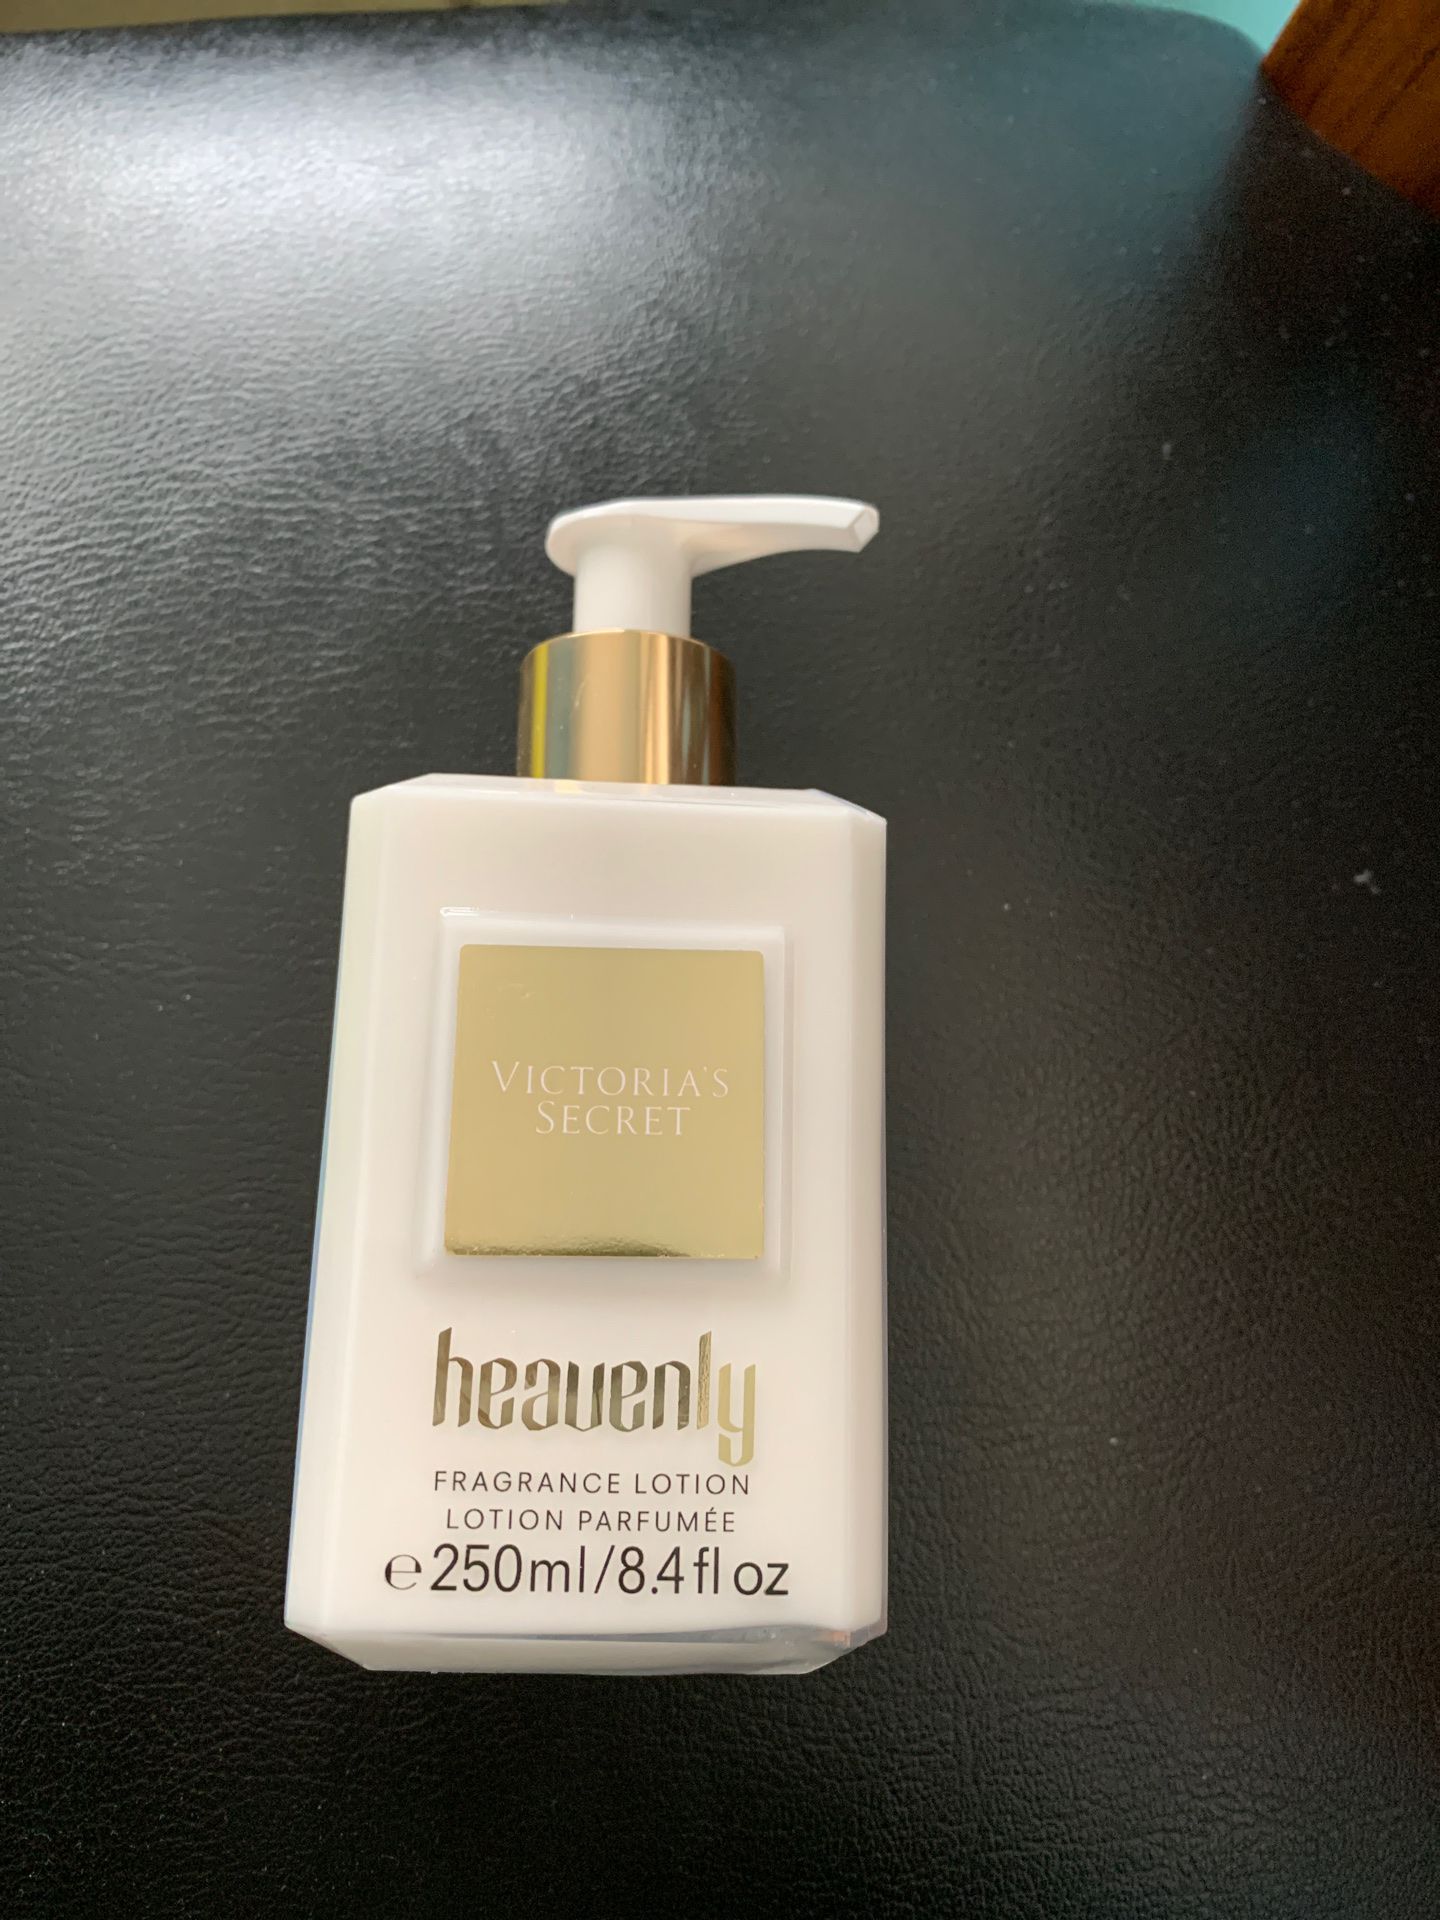 Victoria’s secret heavenly fragrance lotion